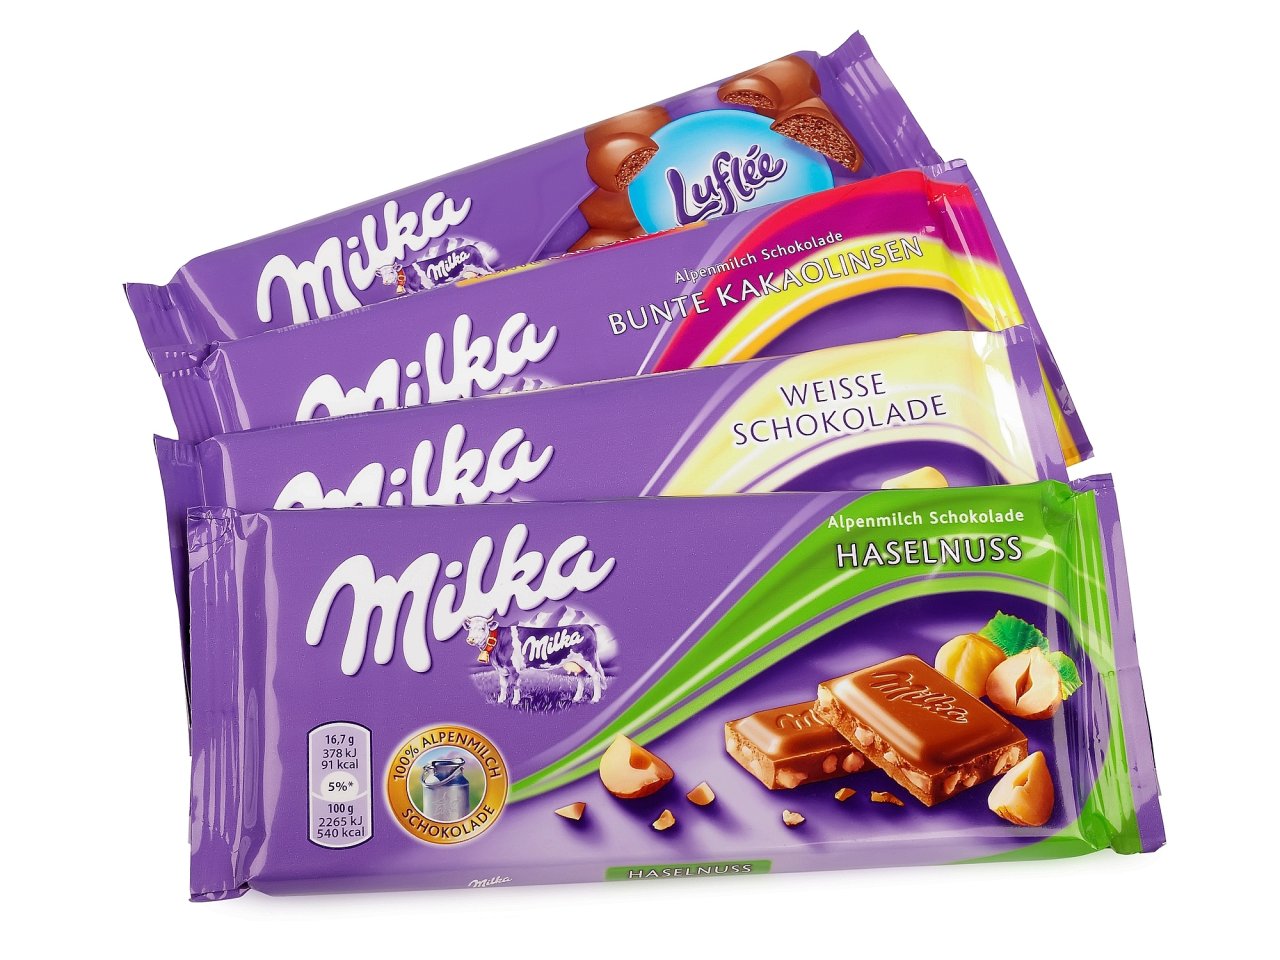 Milka: Tafel weniger Schokolade pro Immer